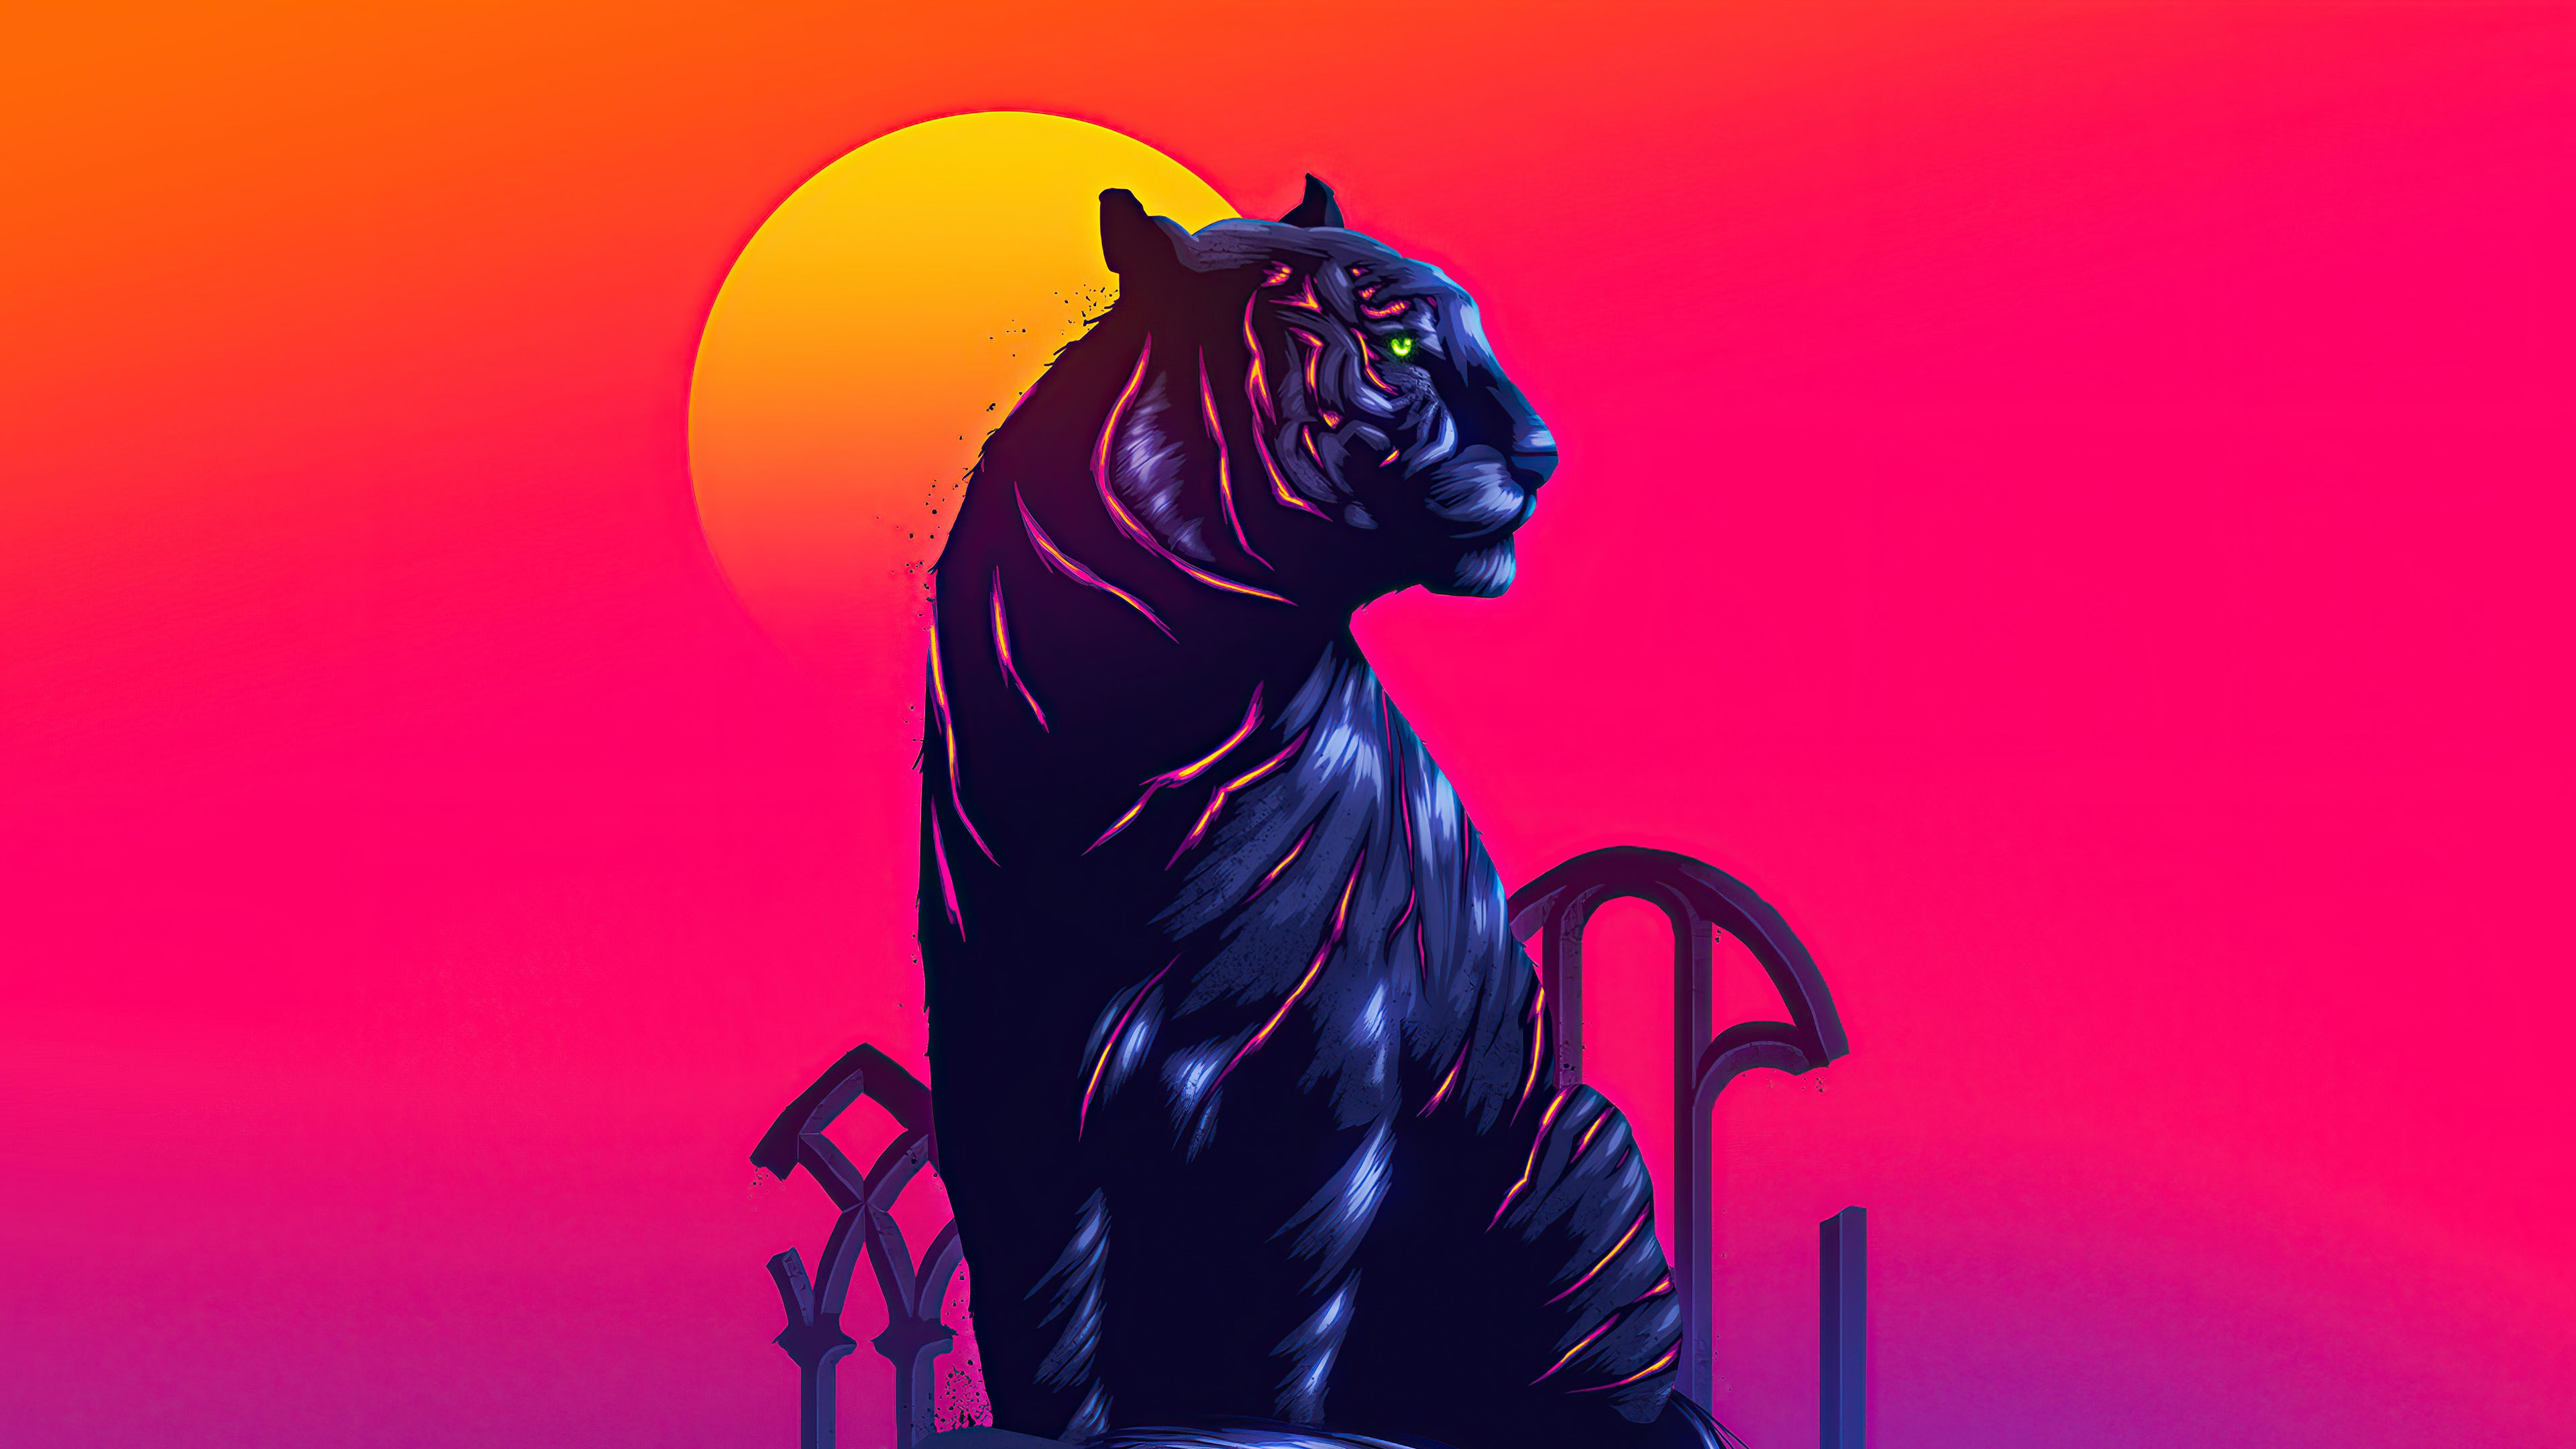 Tiger Neon 4k, HD Artist, 4k Wallpaper, Image, Background